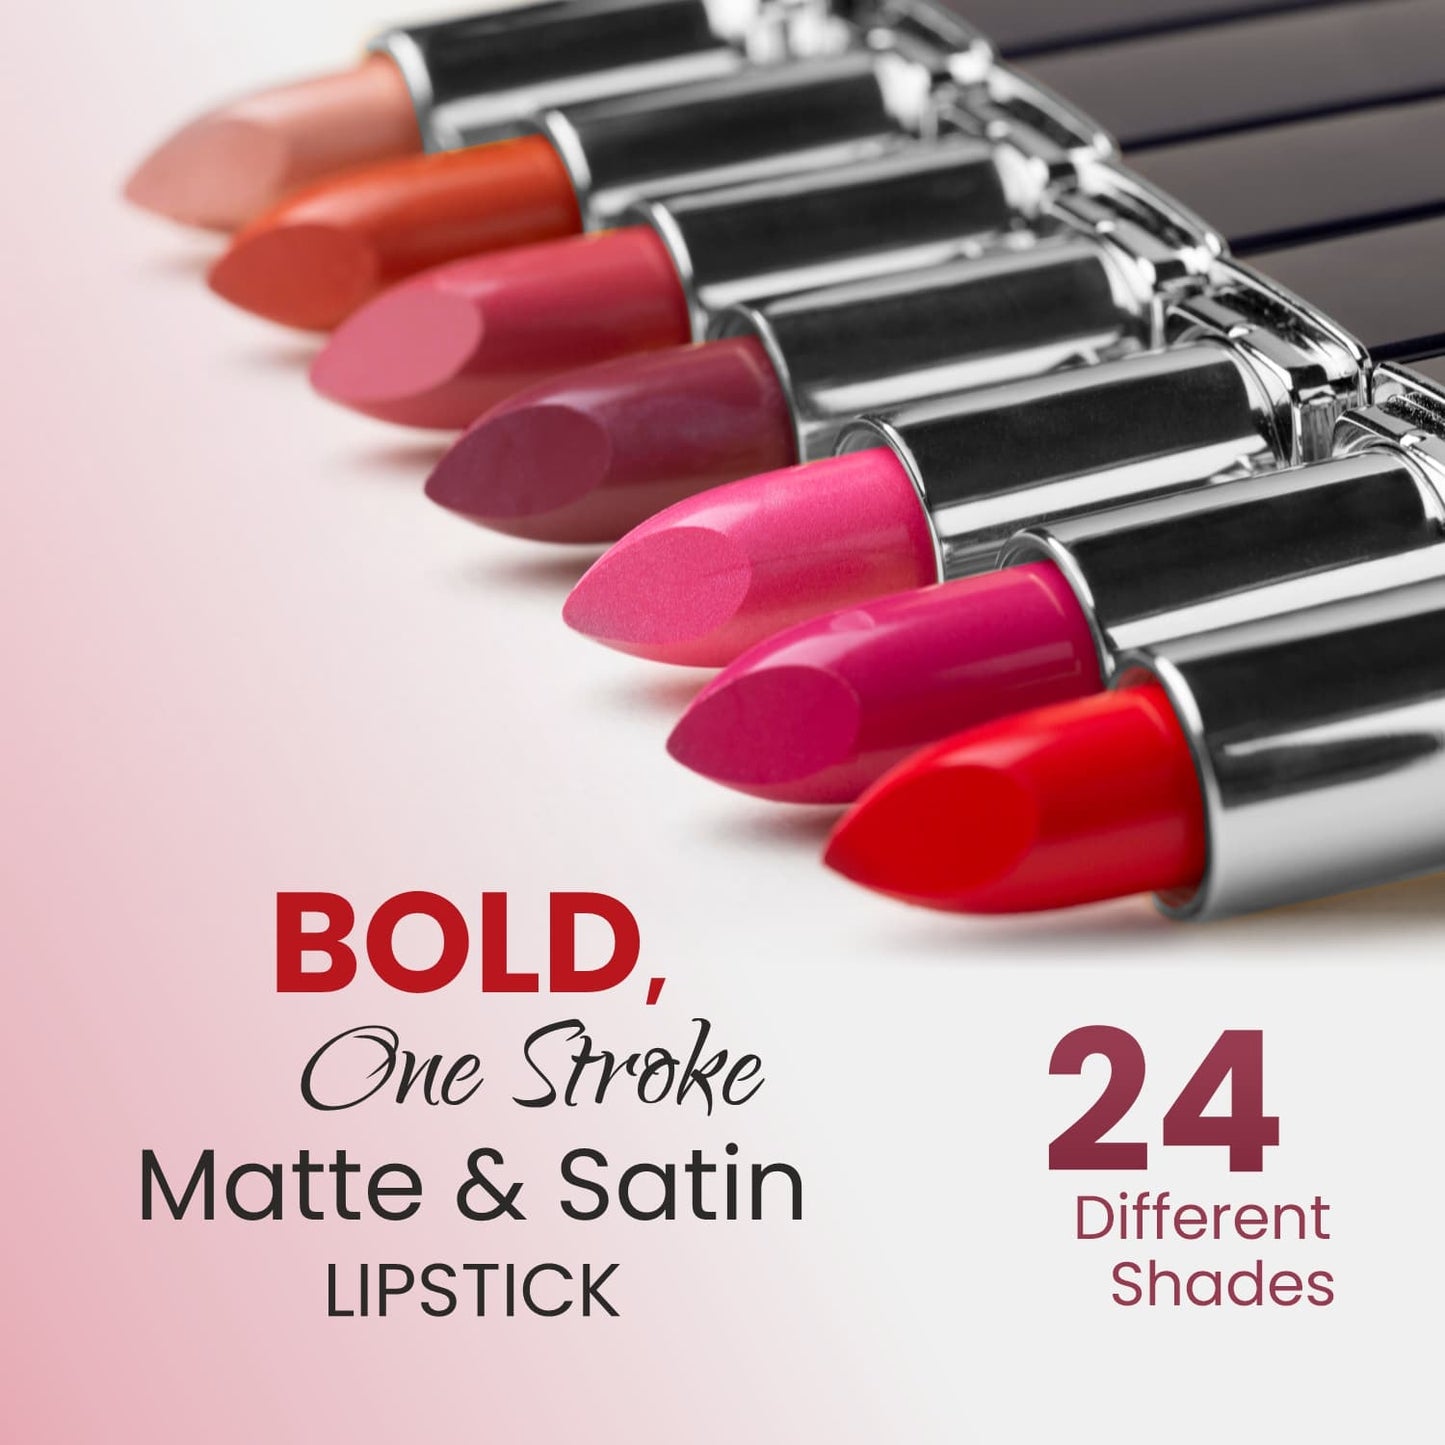 Matte & Satin Lipstick - M11 Marooned